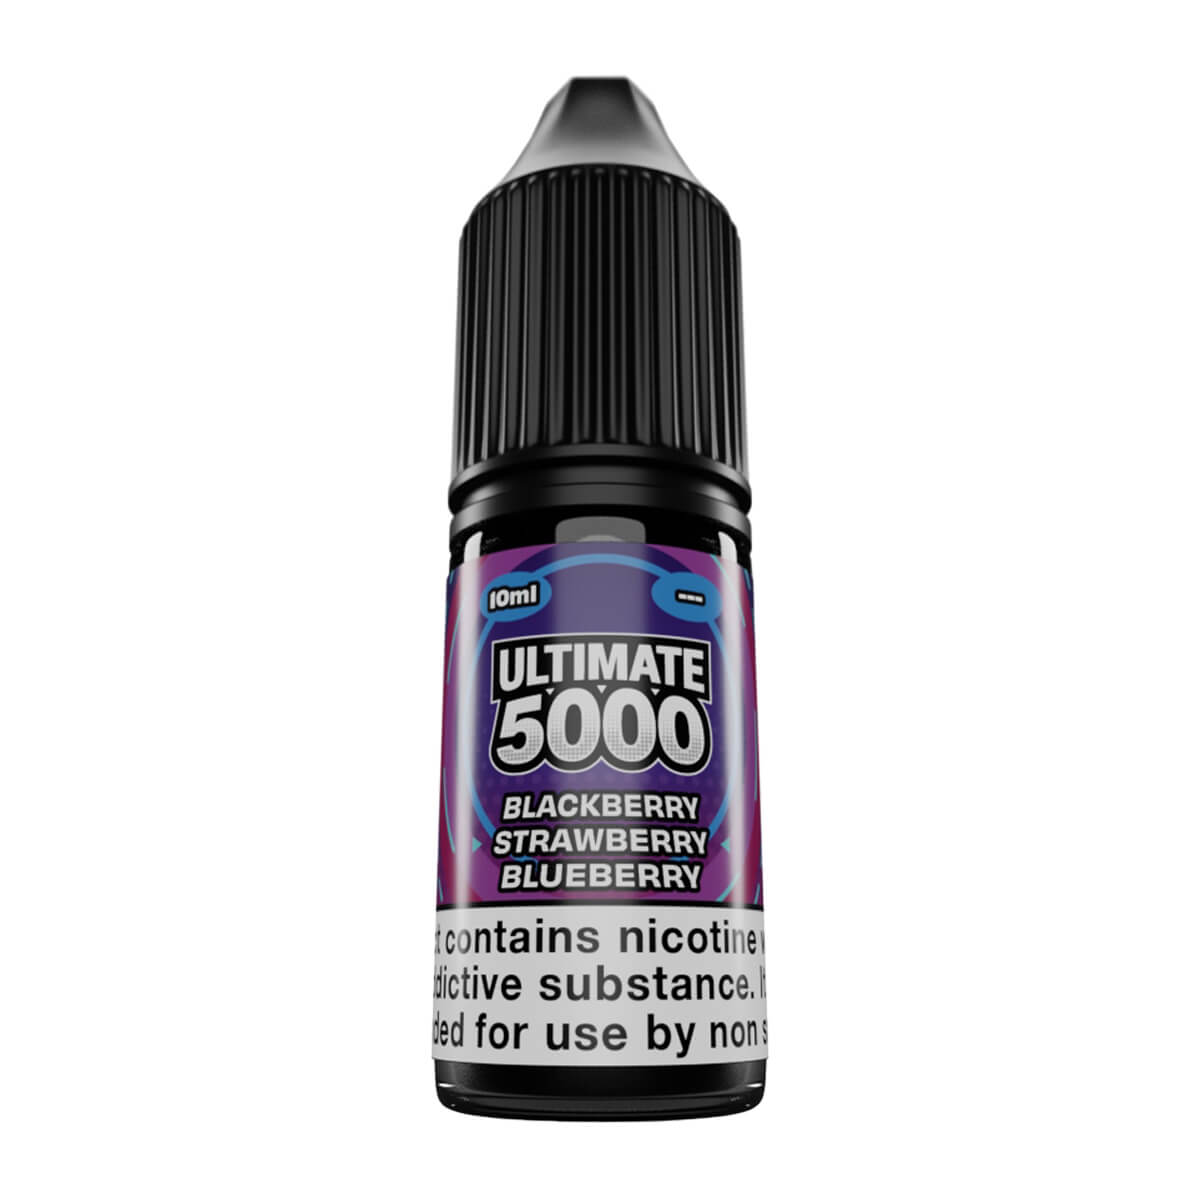 Blackberry Strawberry Blueberry Nic Salt E-Liquid by Ultimate 5000